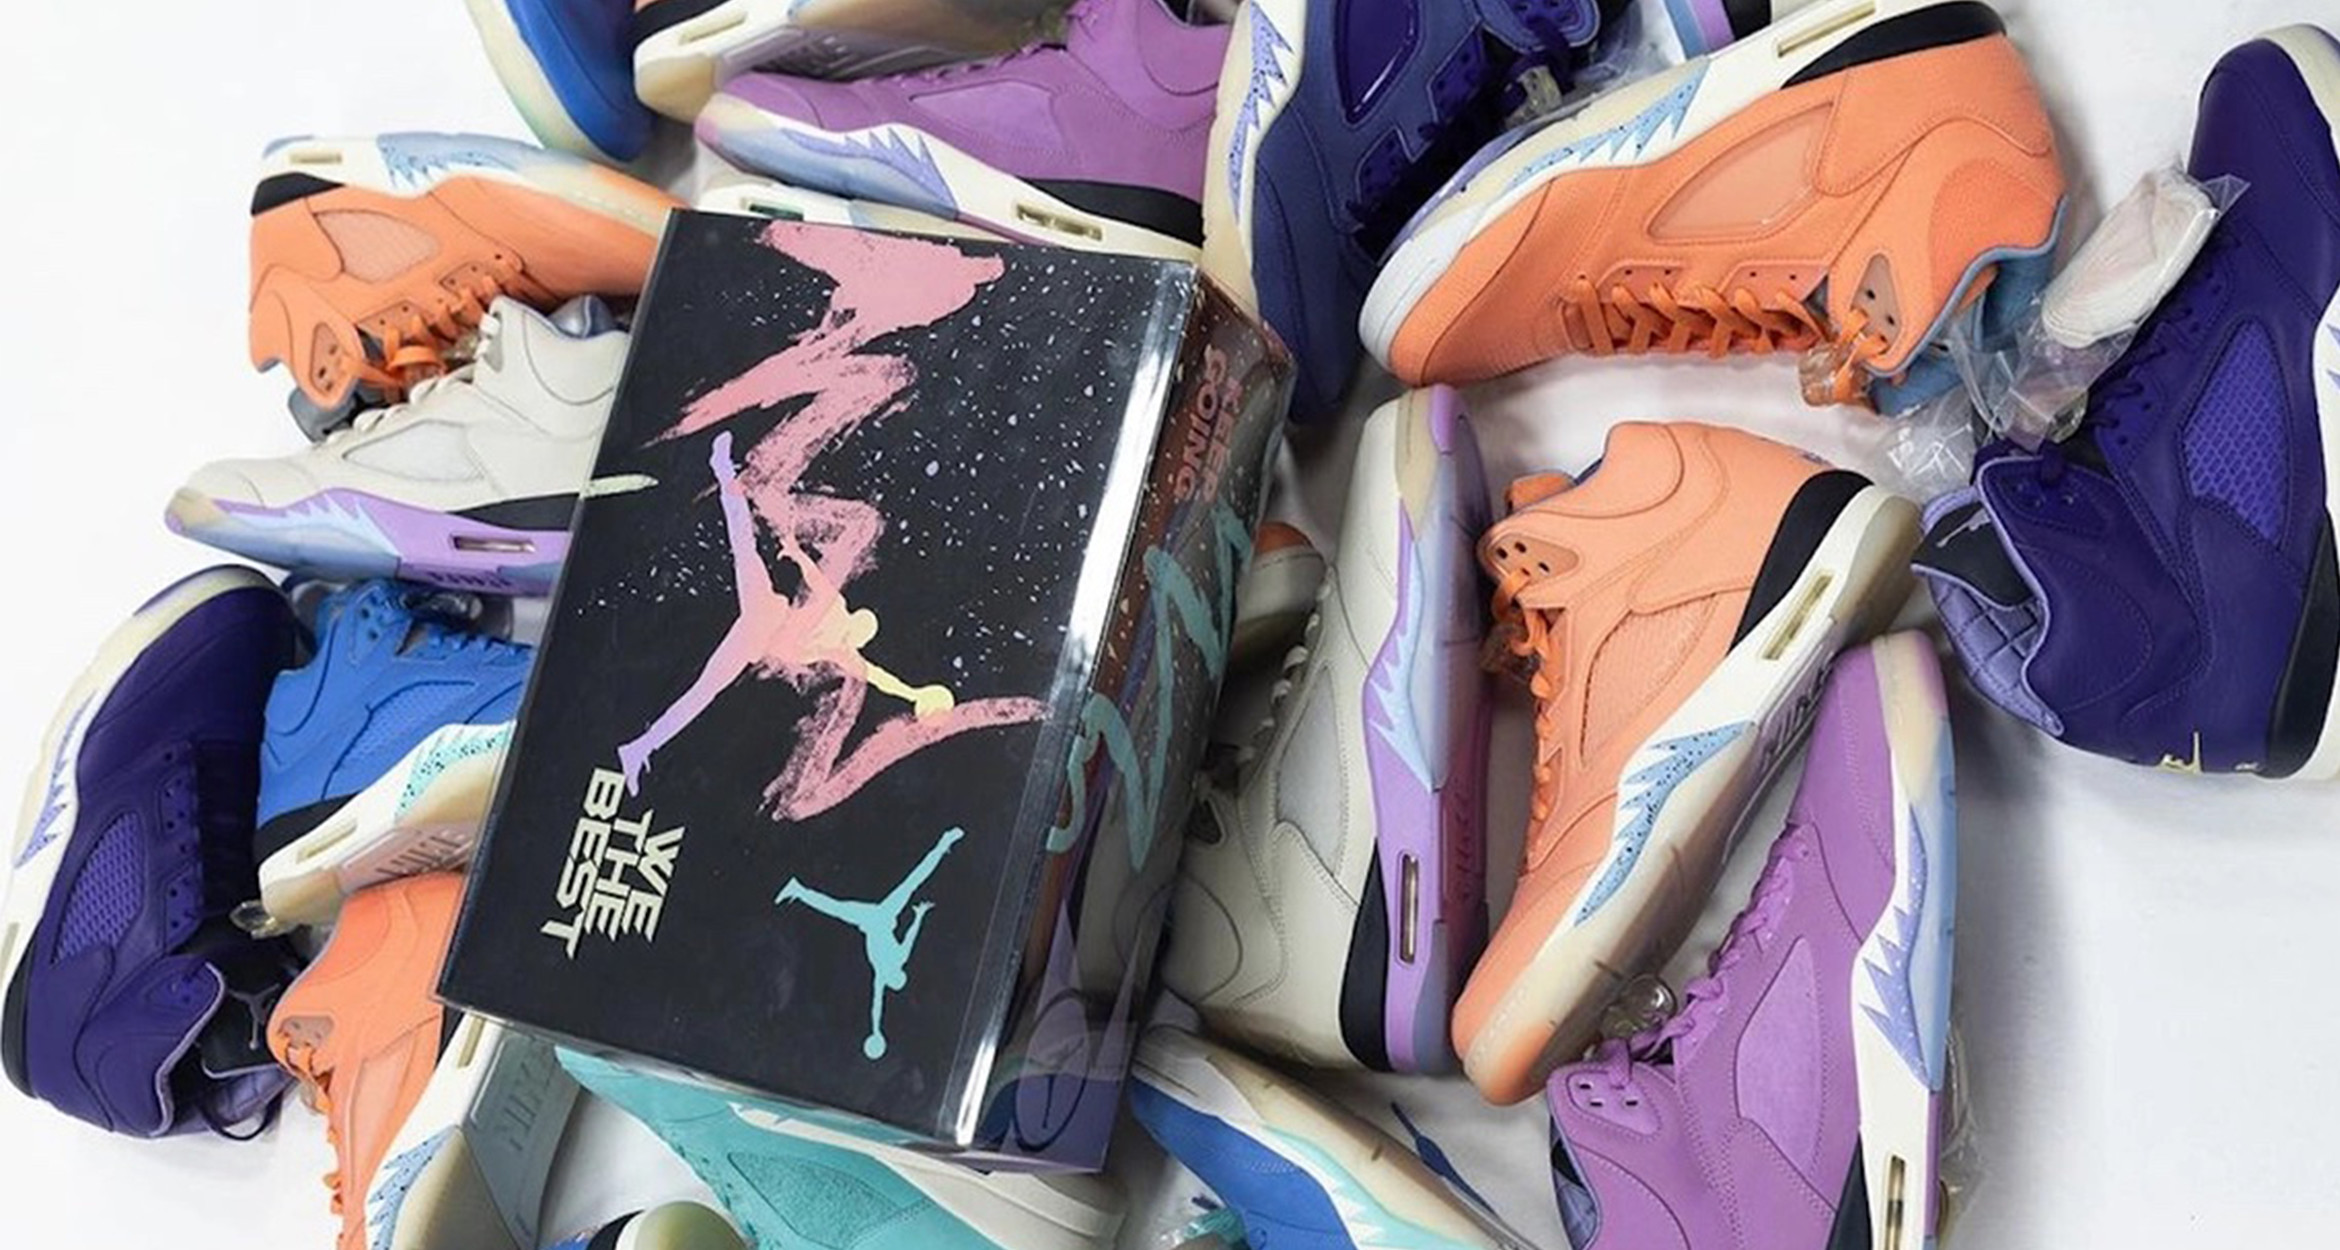 DJ Khaled On Why Jordans Will Always Be His Kicks Of Choice